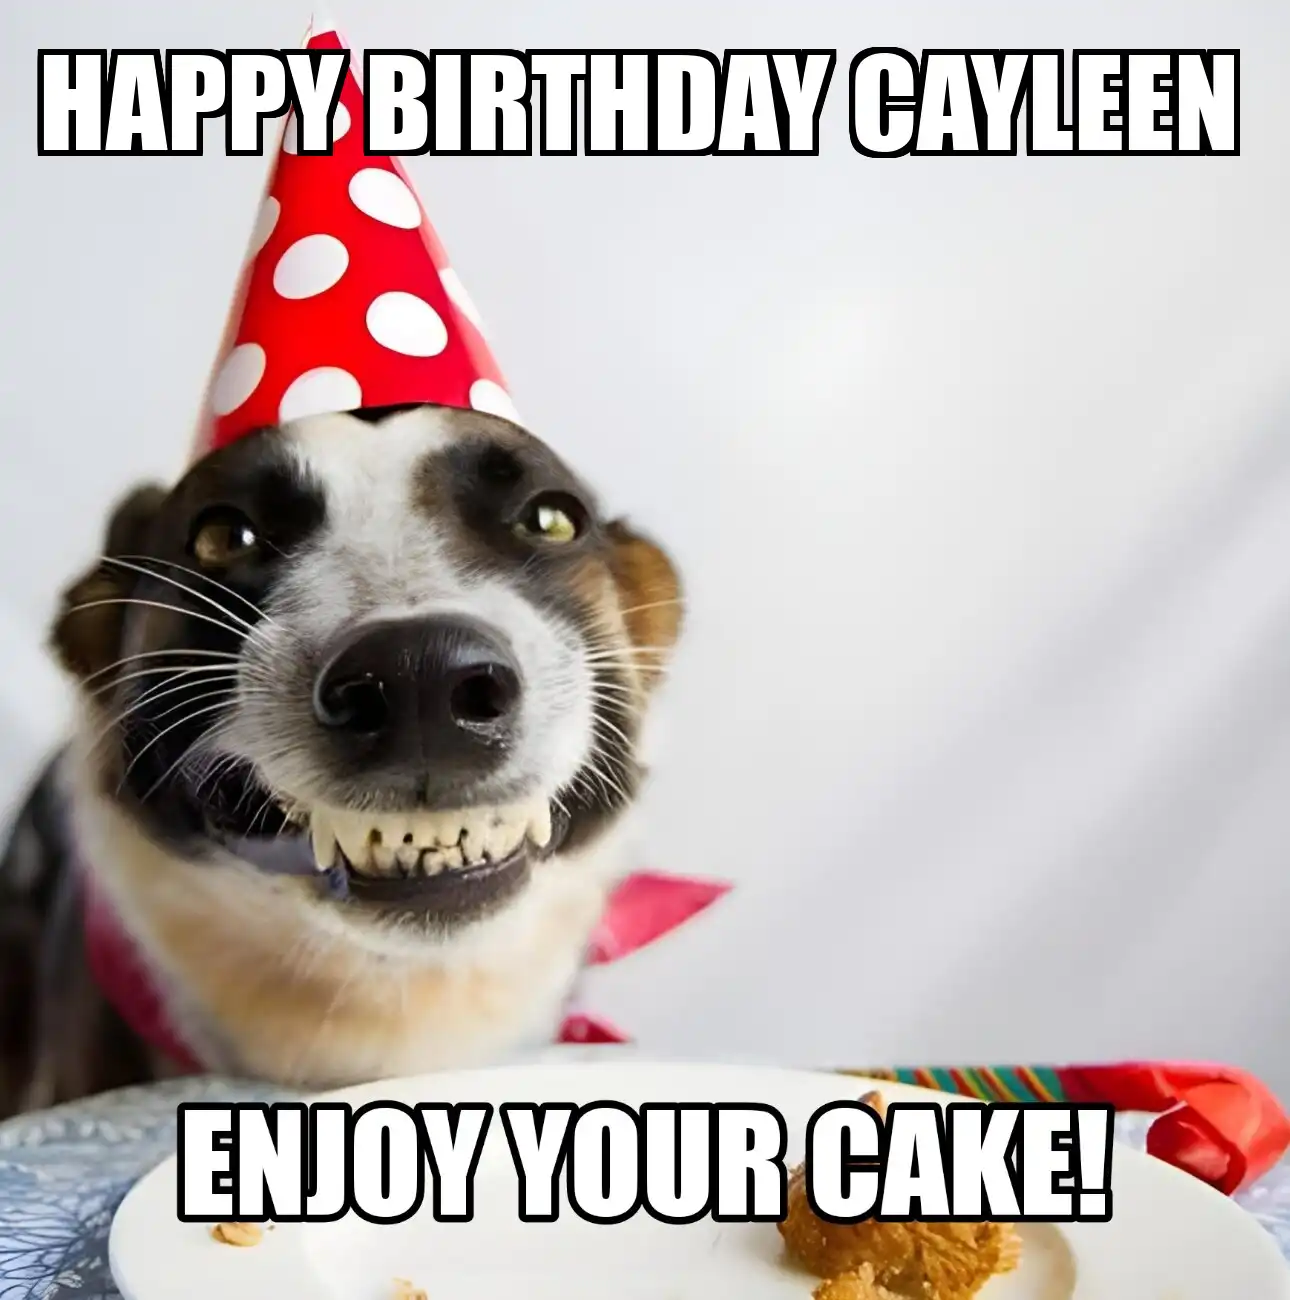 Happy Birthday Cayleen Enjoy Your Cake Dog Meme